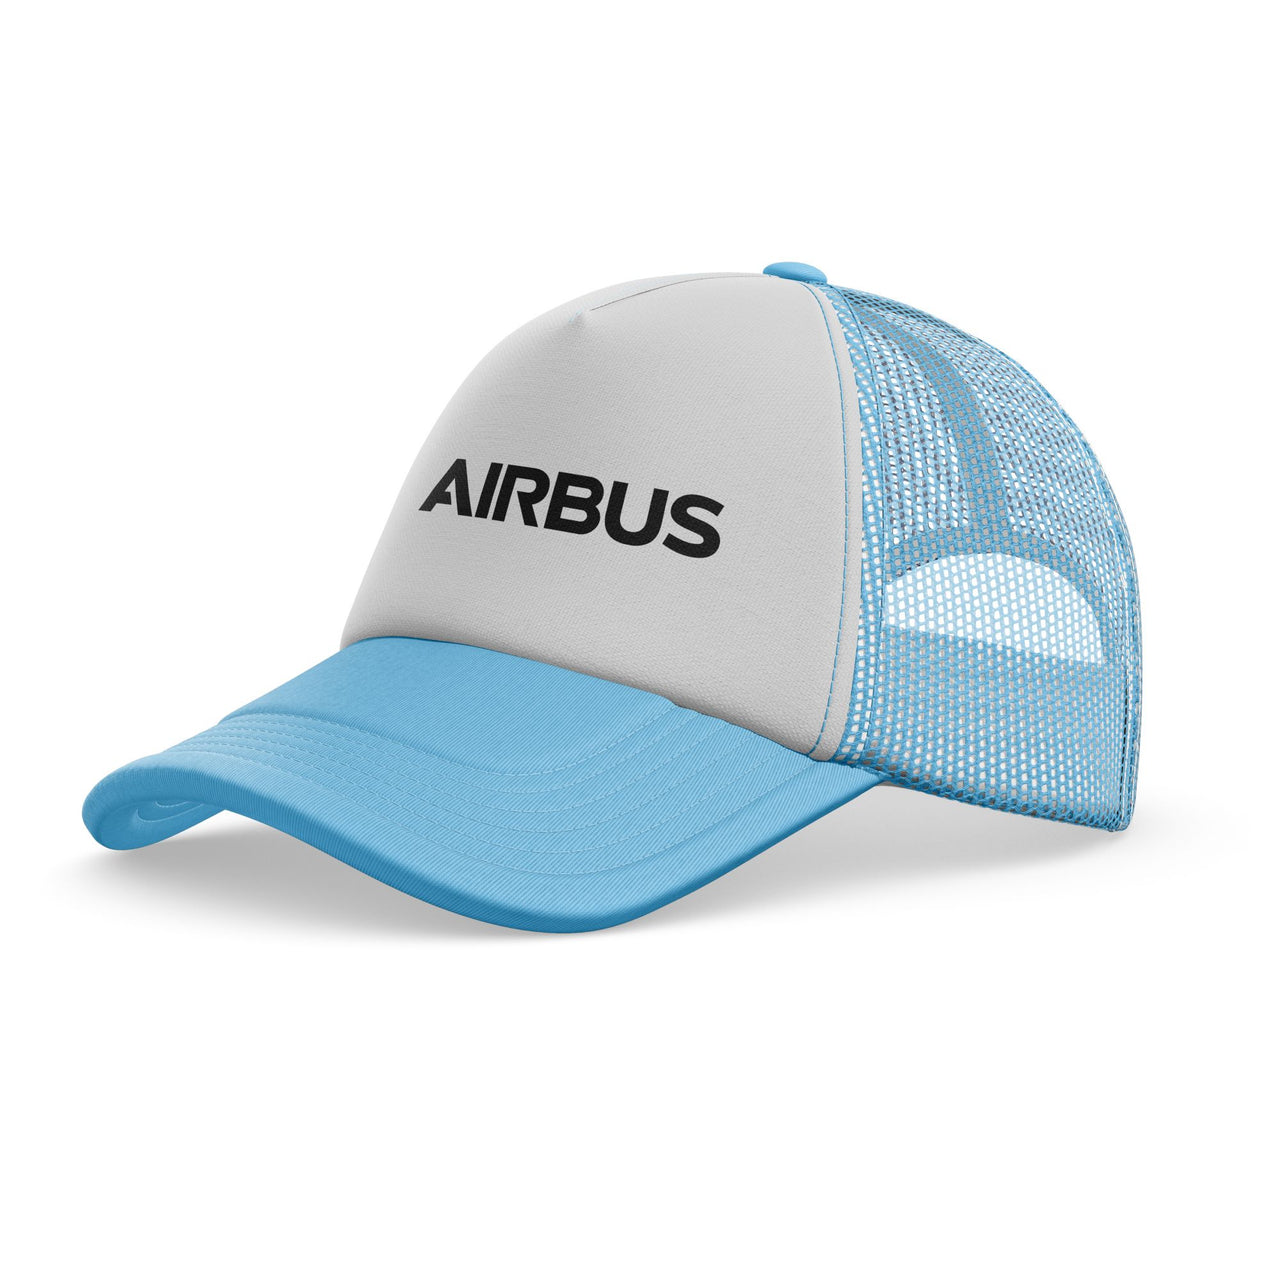 Airbus & Text Designed Trucker Caps & Hats